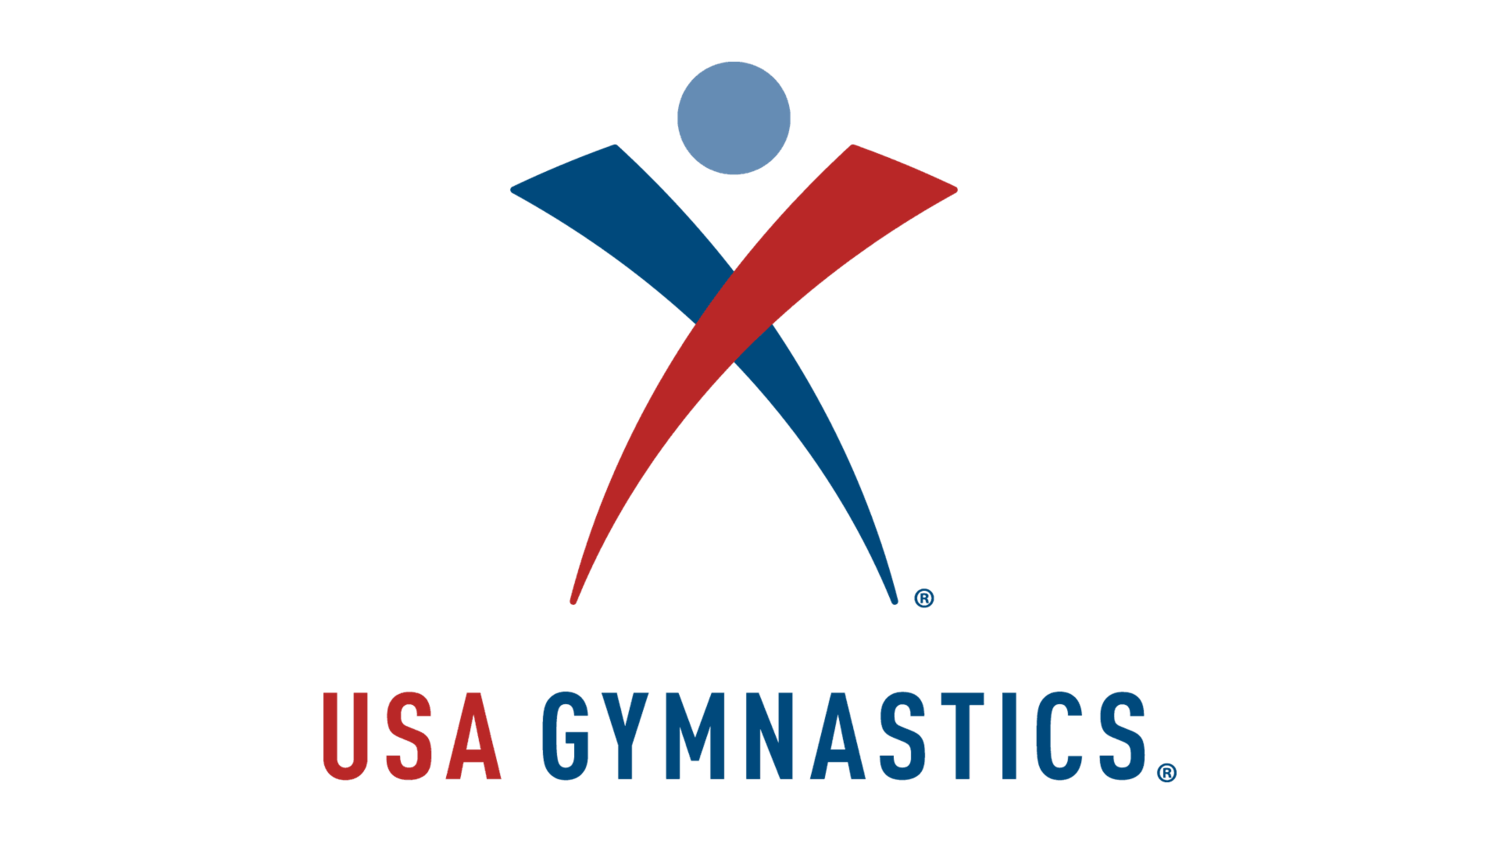 Idaho state danik. Gymnastics clipart gymnastics meet